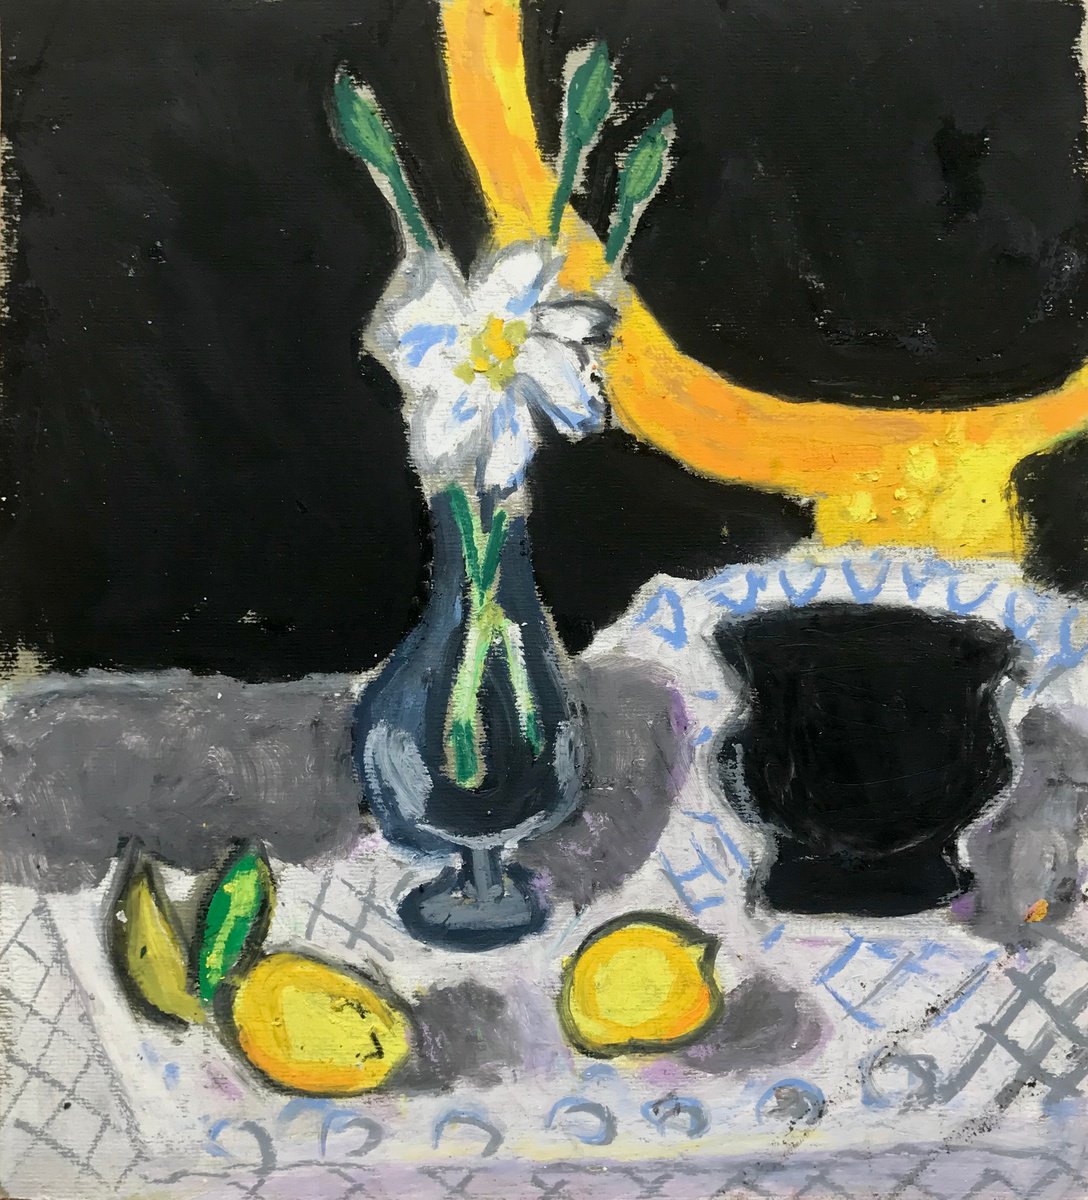 Mirror, Flower And Lemon by Milica Radovi?